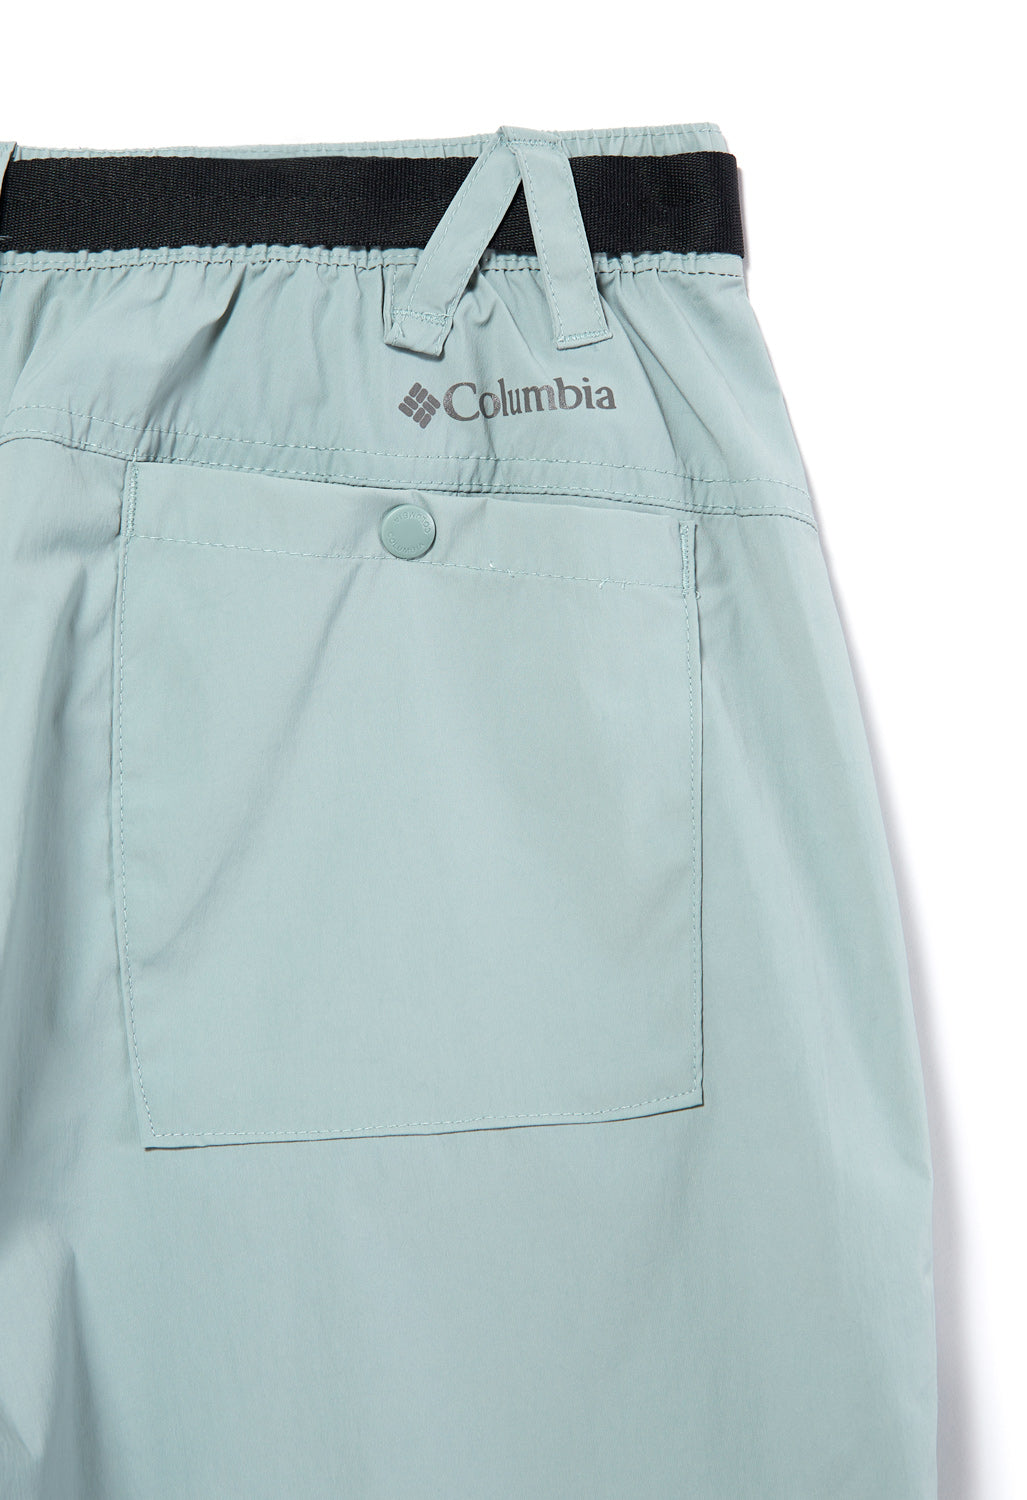 Columbia Men's Maxtrail Lite Shorts - Niagara